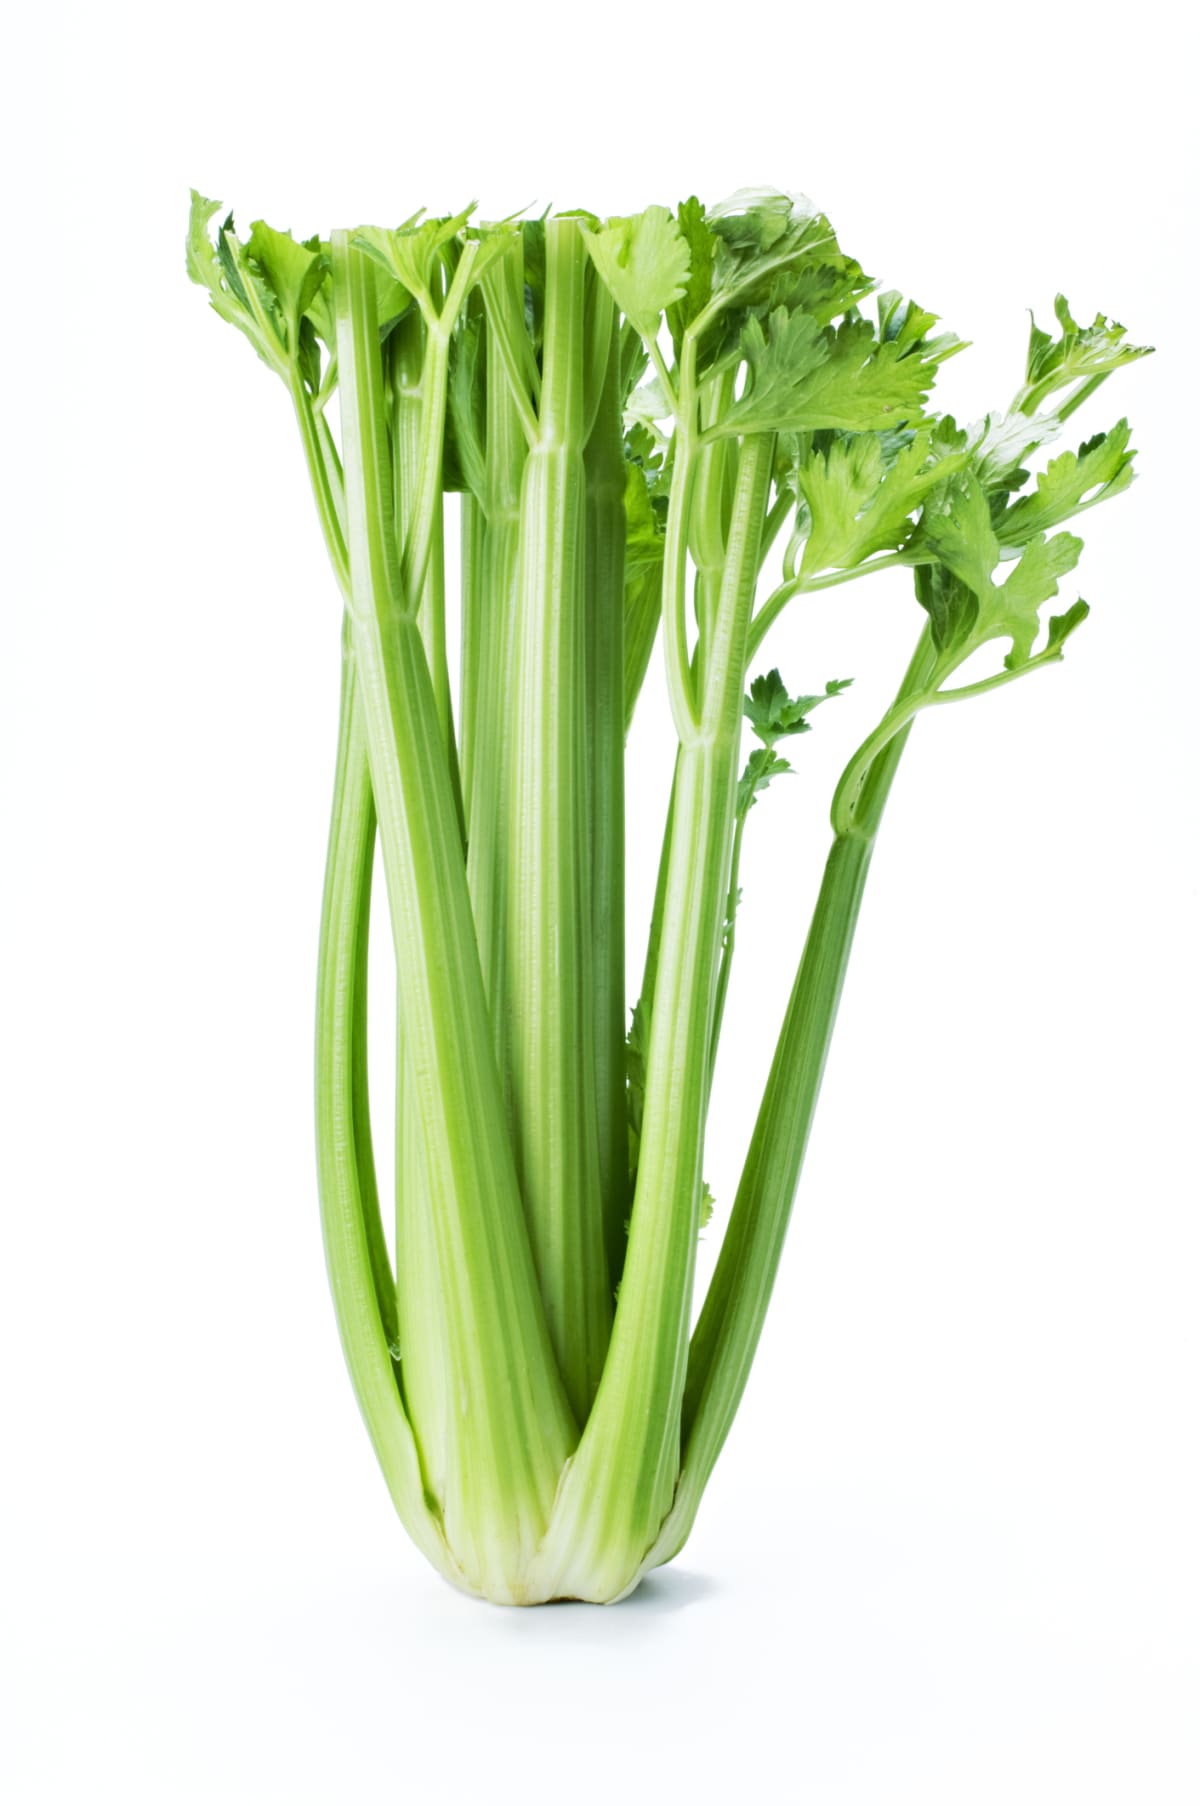 Celery on a white background